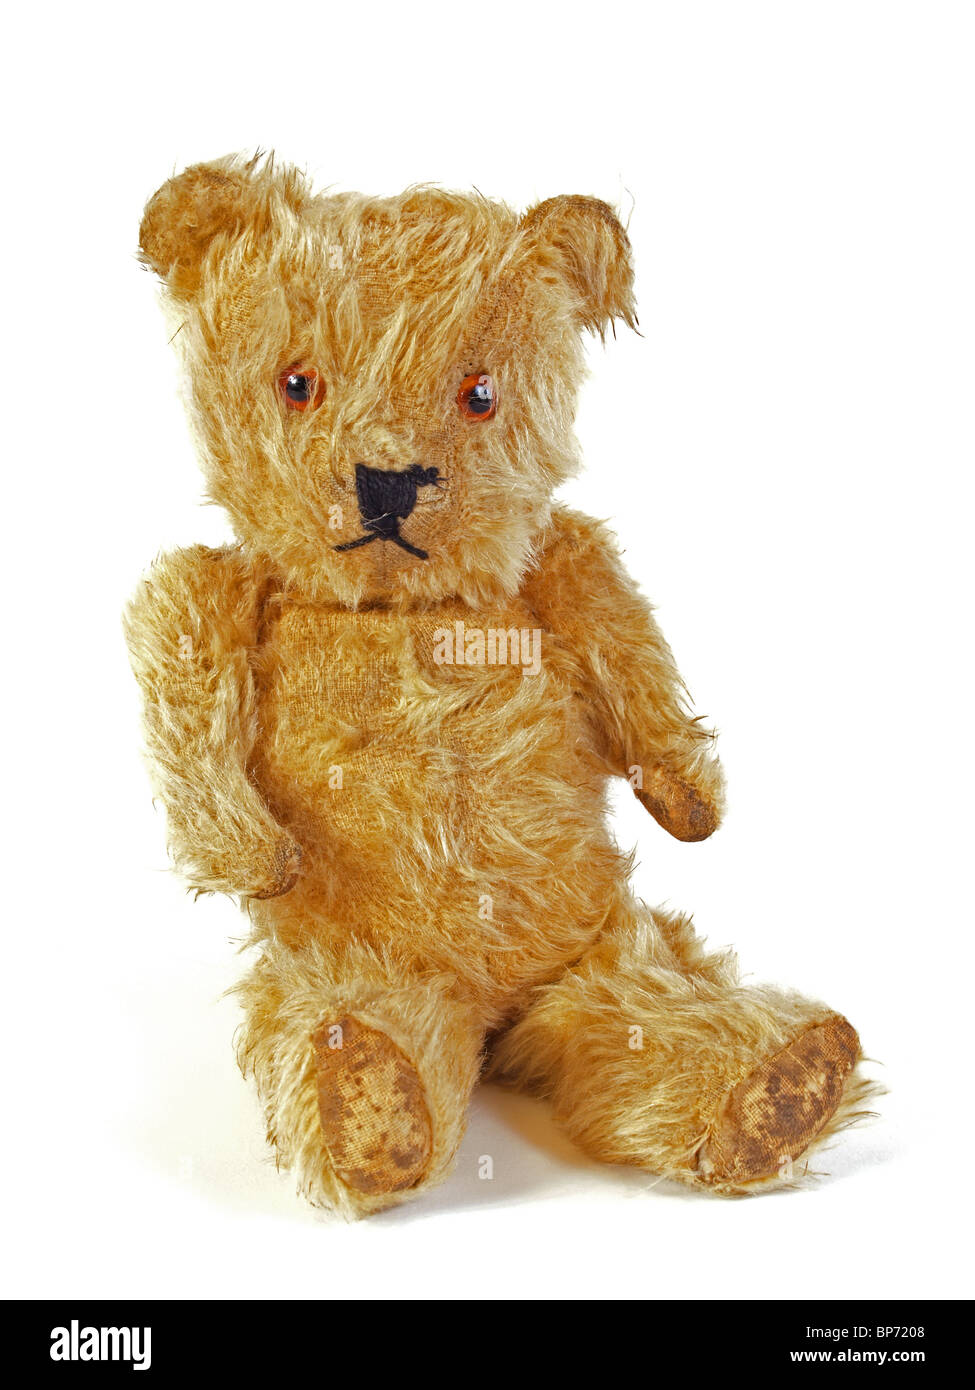 Teddy Bear on a plain white background. Stock Photo